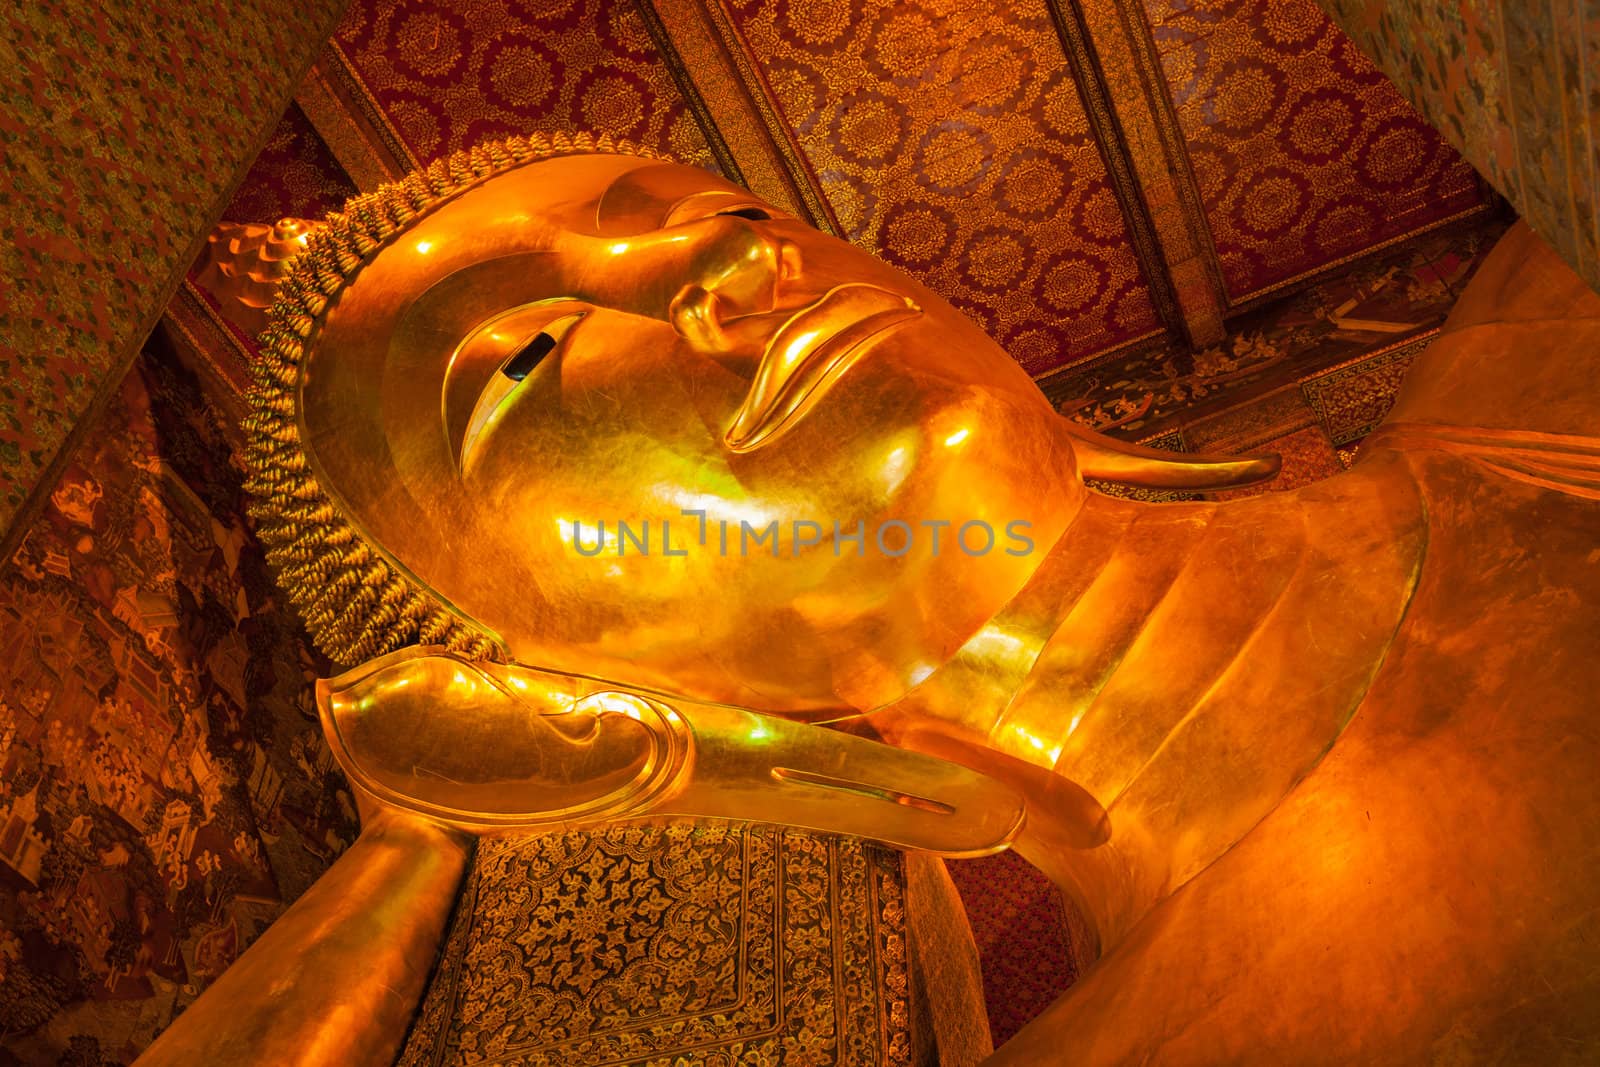 Reclining Buddha face by dimol